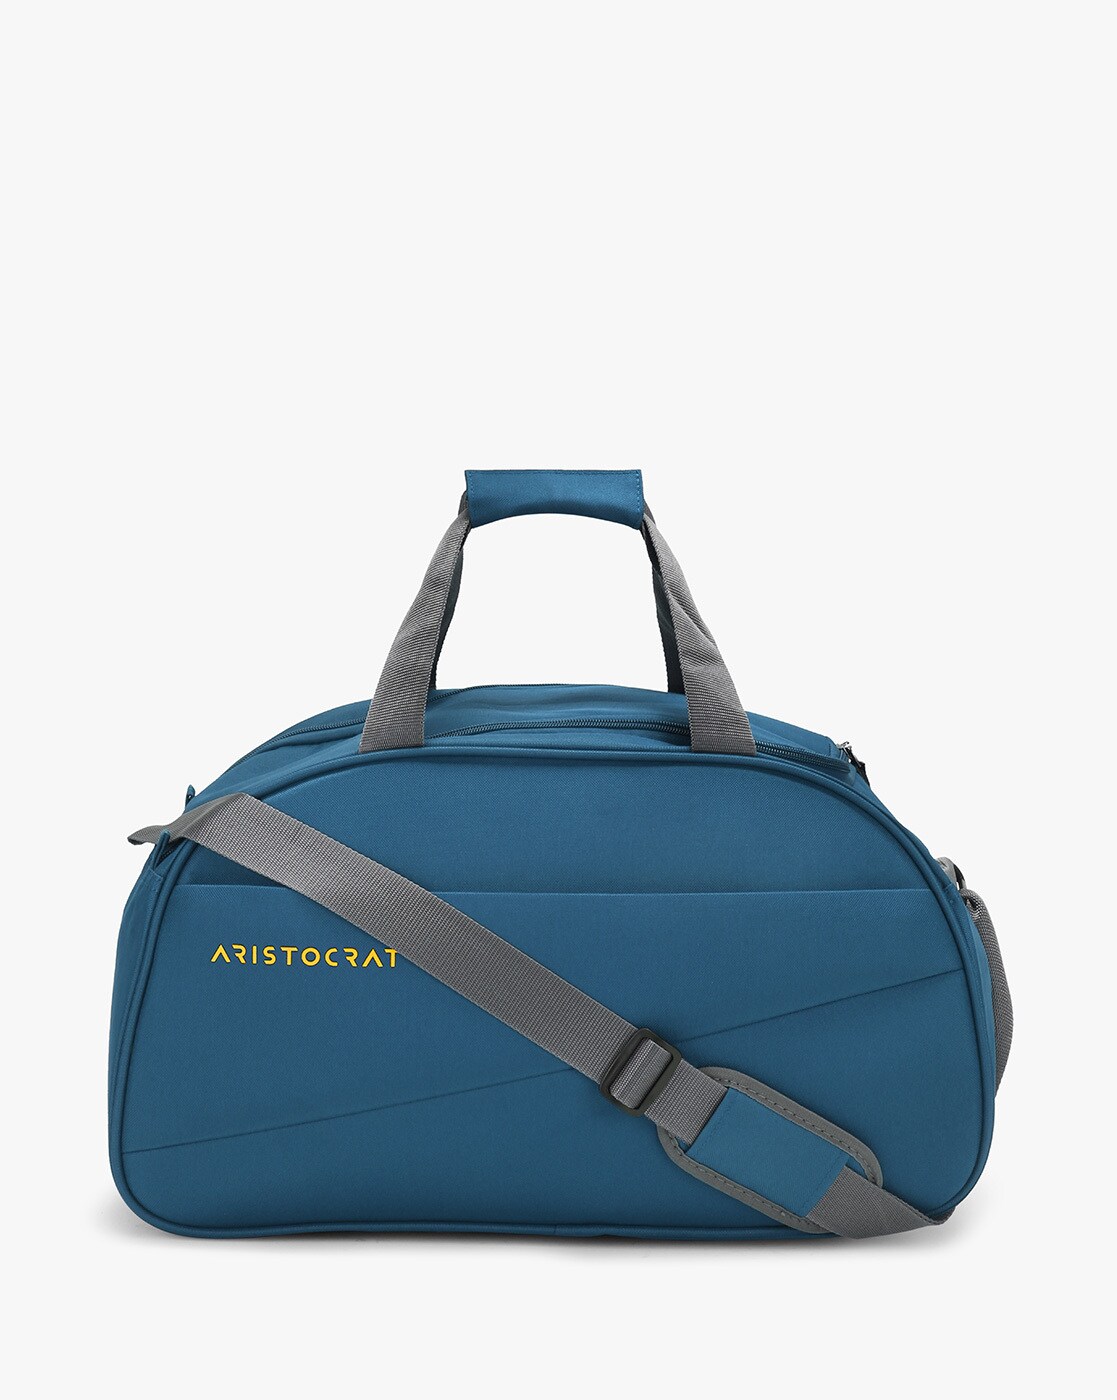 Buy Aristocrat Unisex Regal Laptop Backpack (E) Blue at Amazon.in